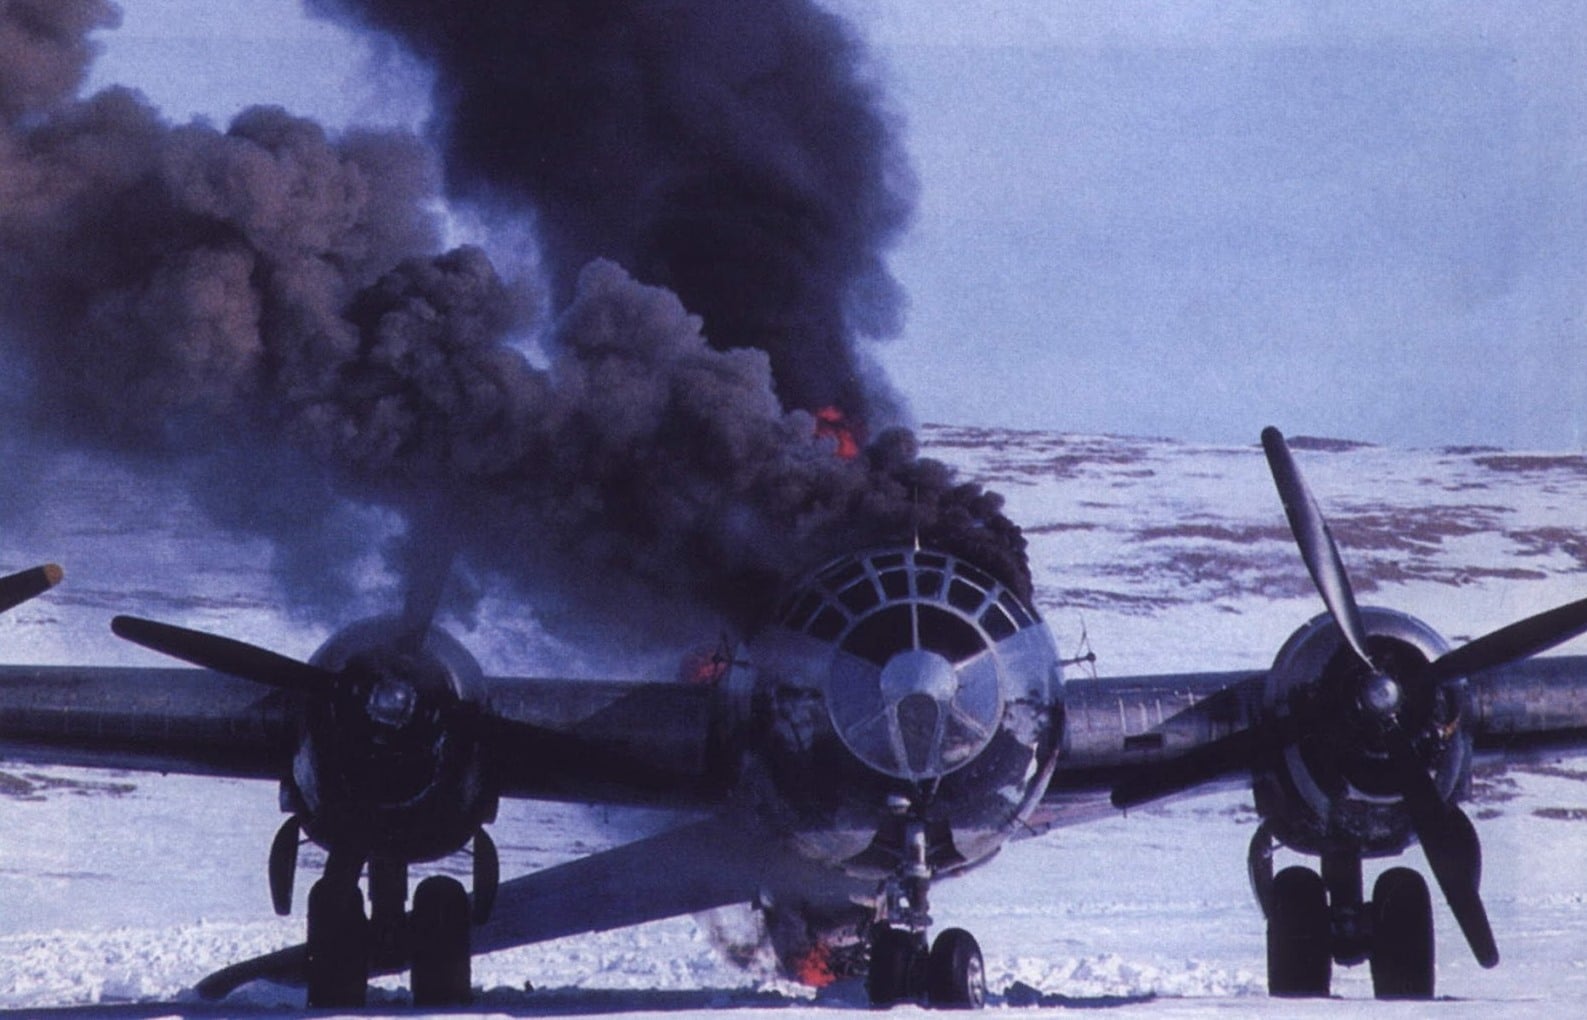 B-29 on fire.